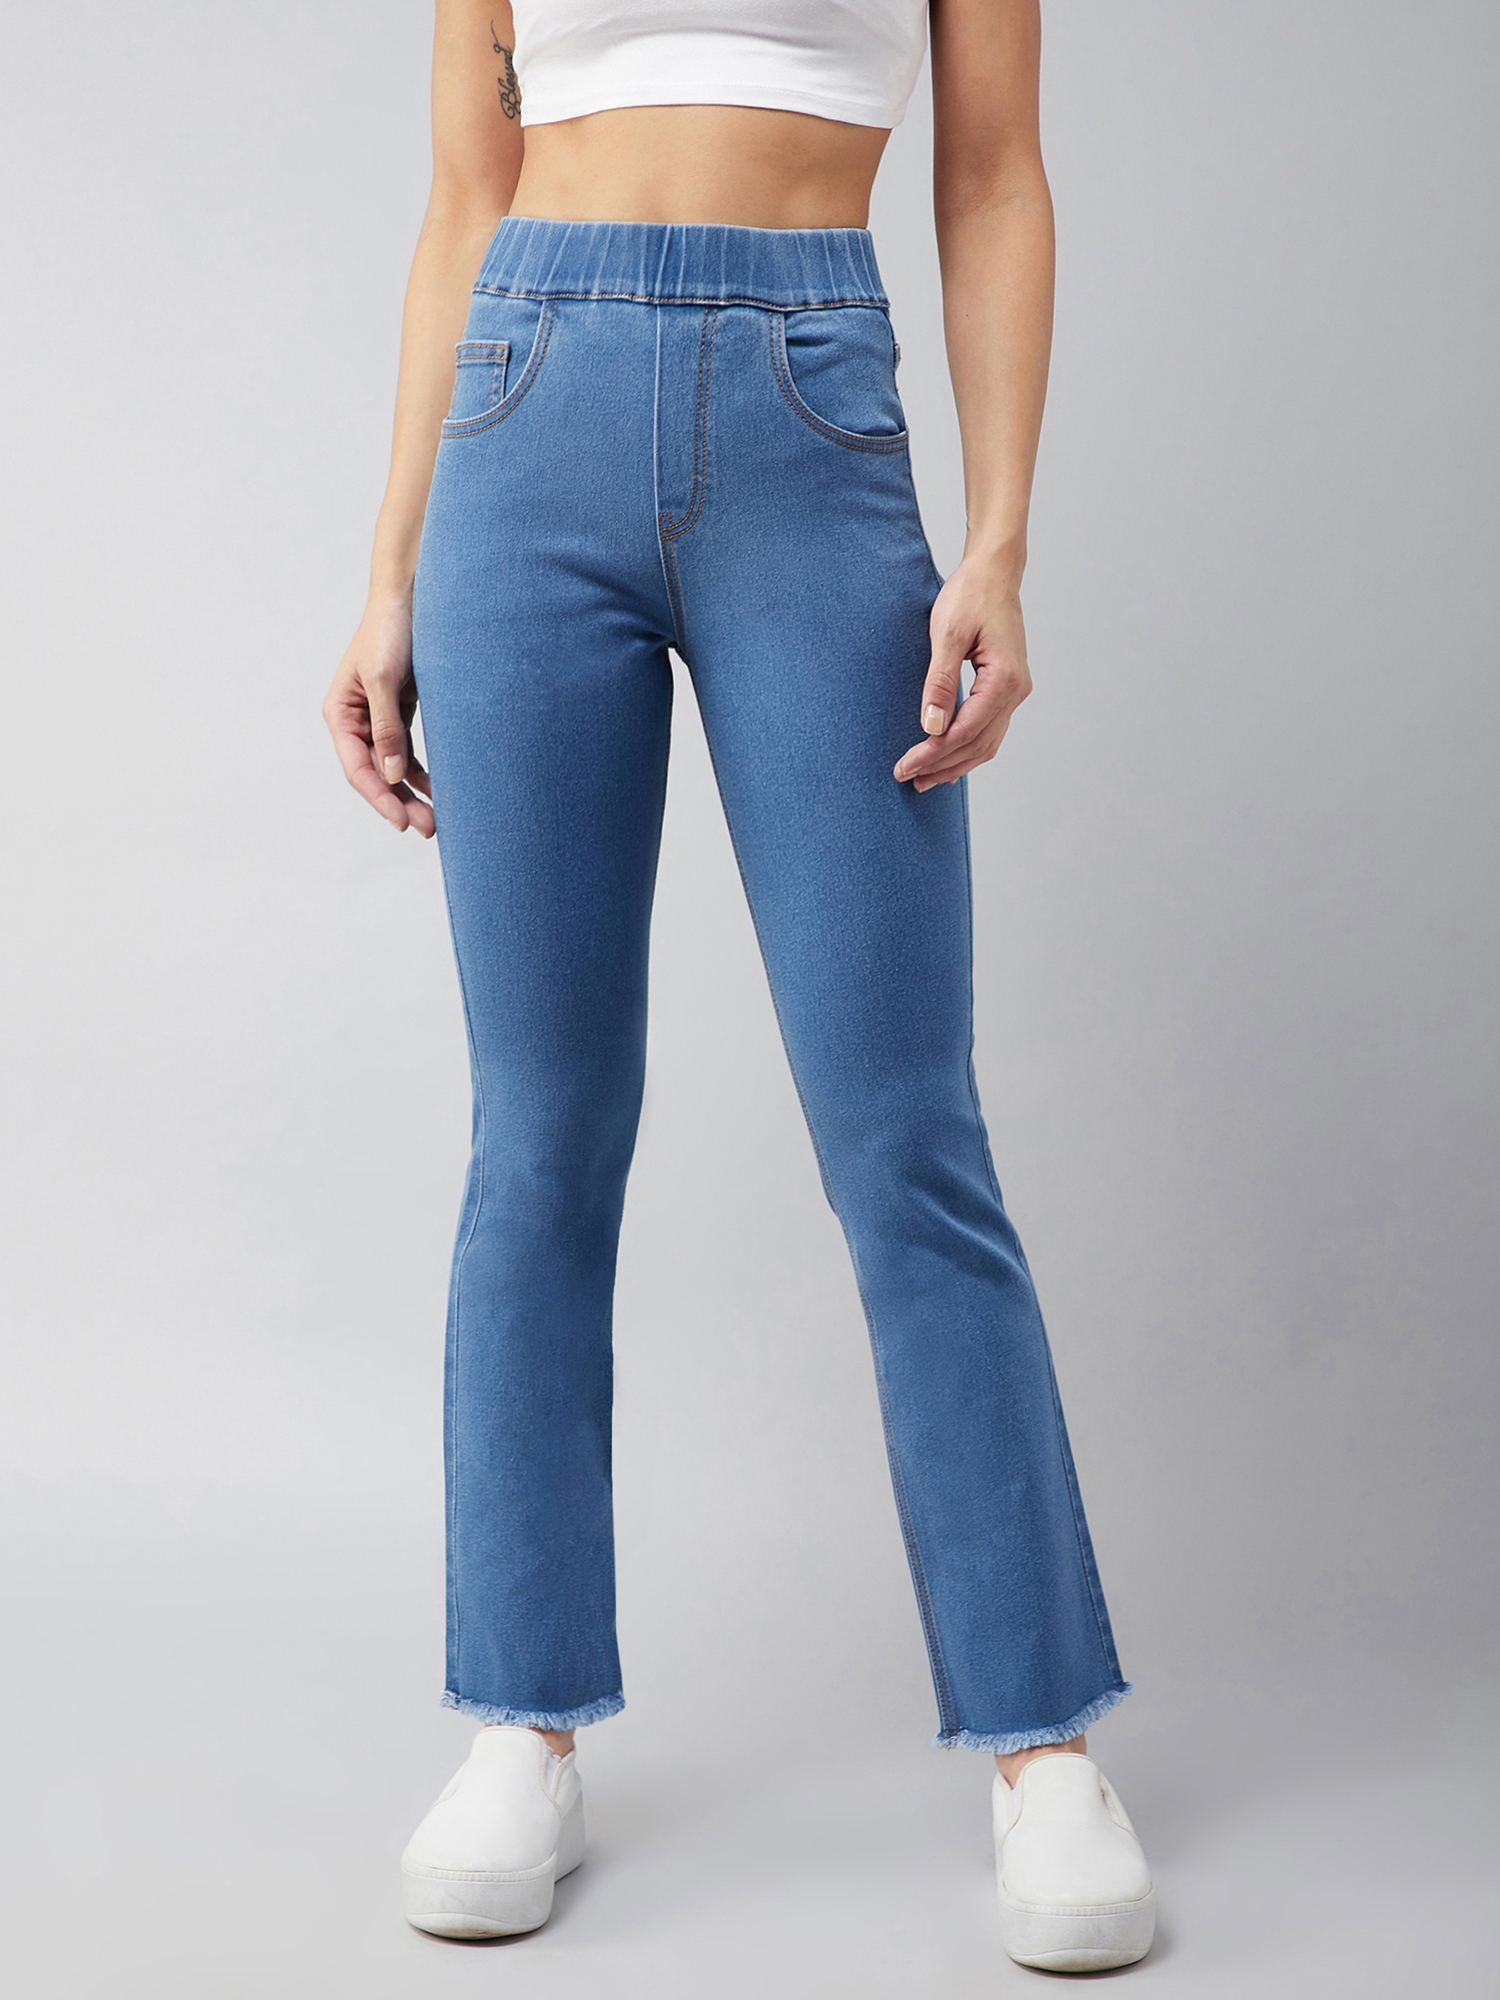 Bootcut Jeans Women, Flare Jeans | VENUS